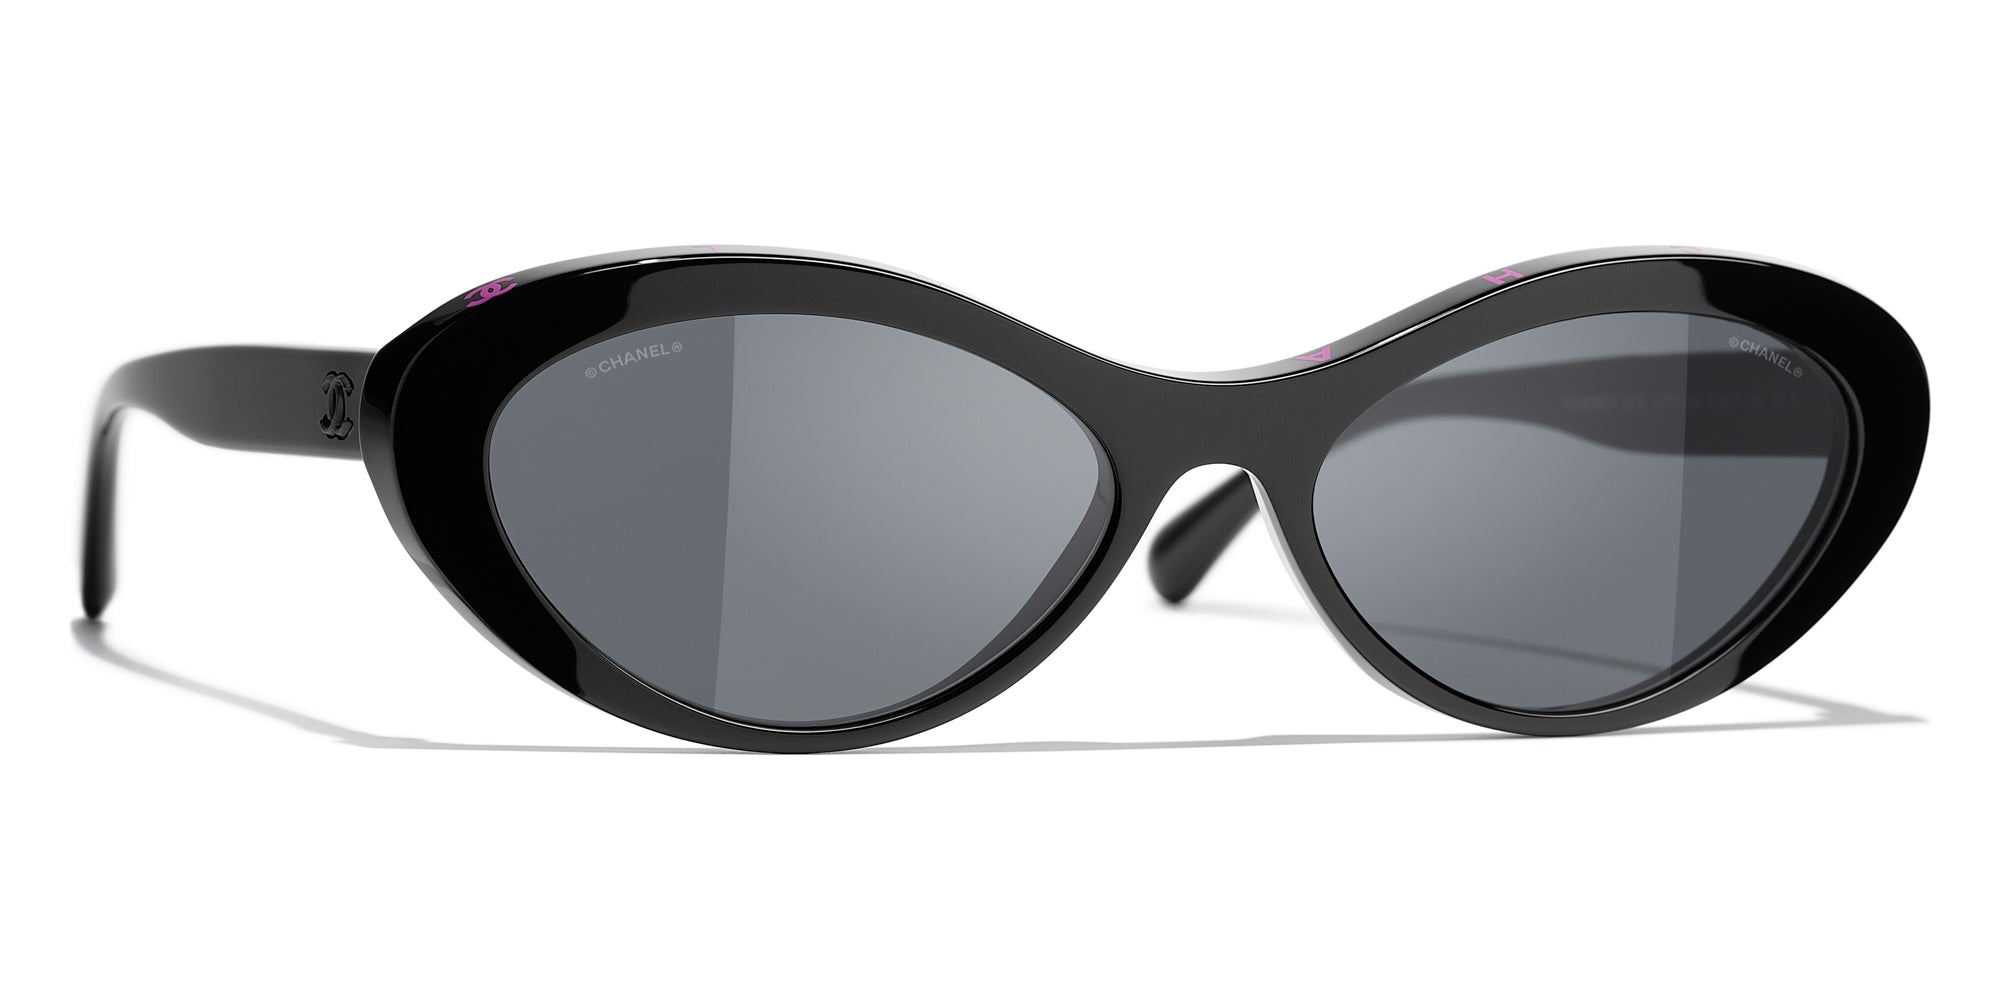 Sunglasses Chanel Silver in Metal - 34465228